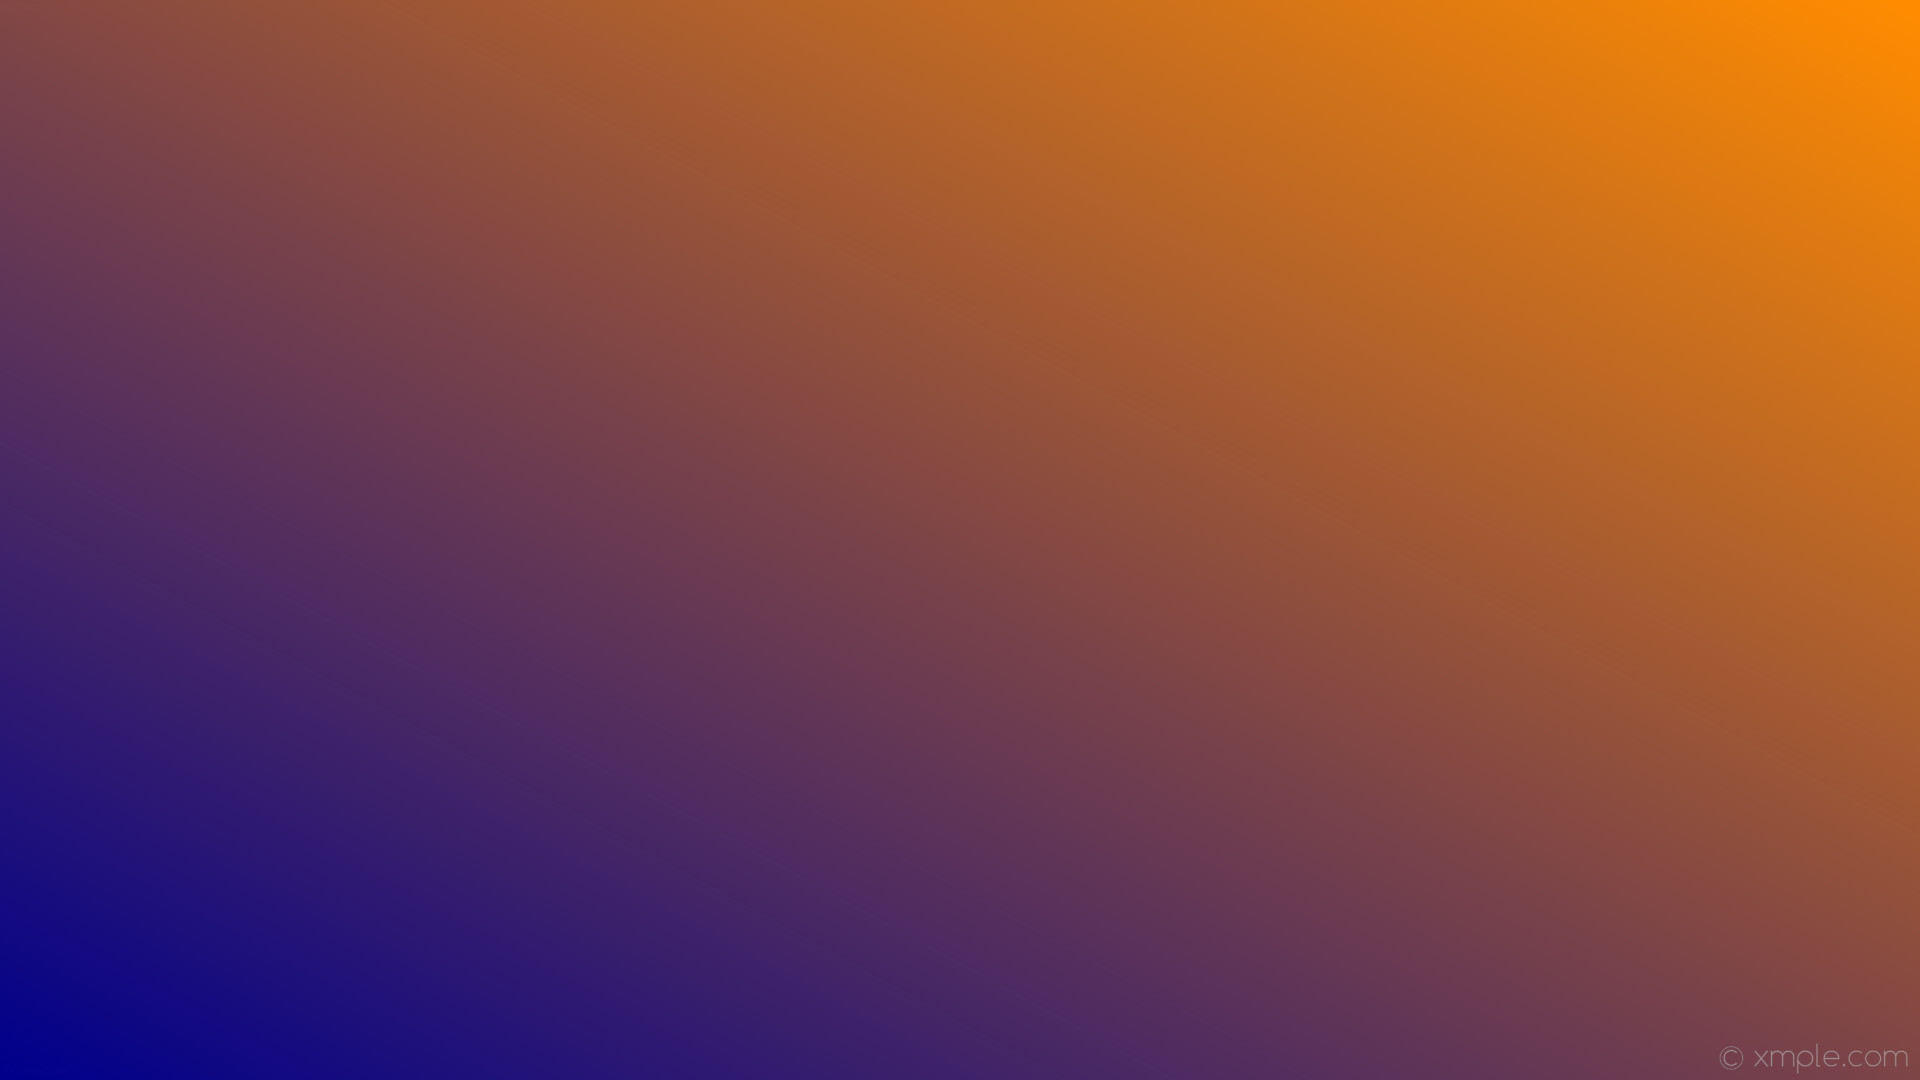 dunkelorange tapete,lila,blau,violett,orange,gelb